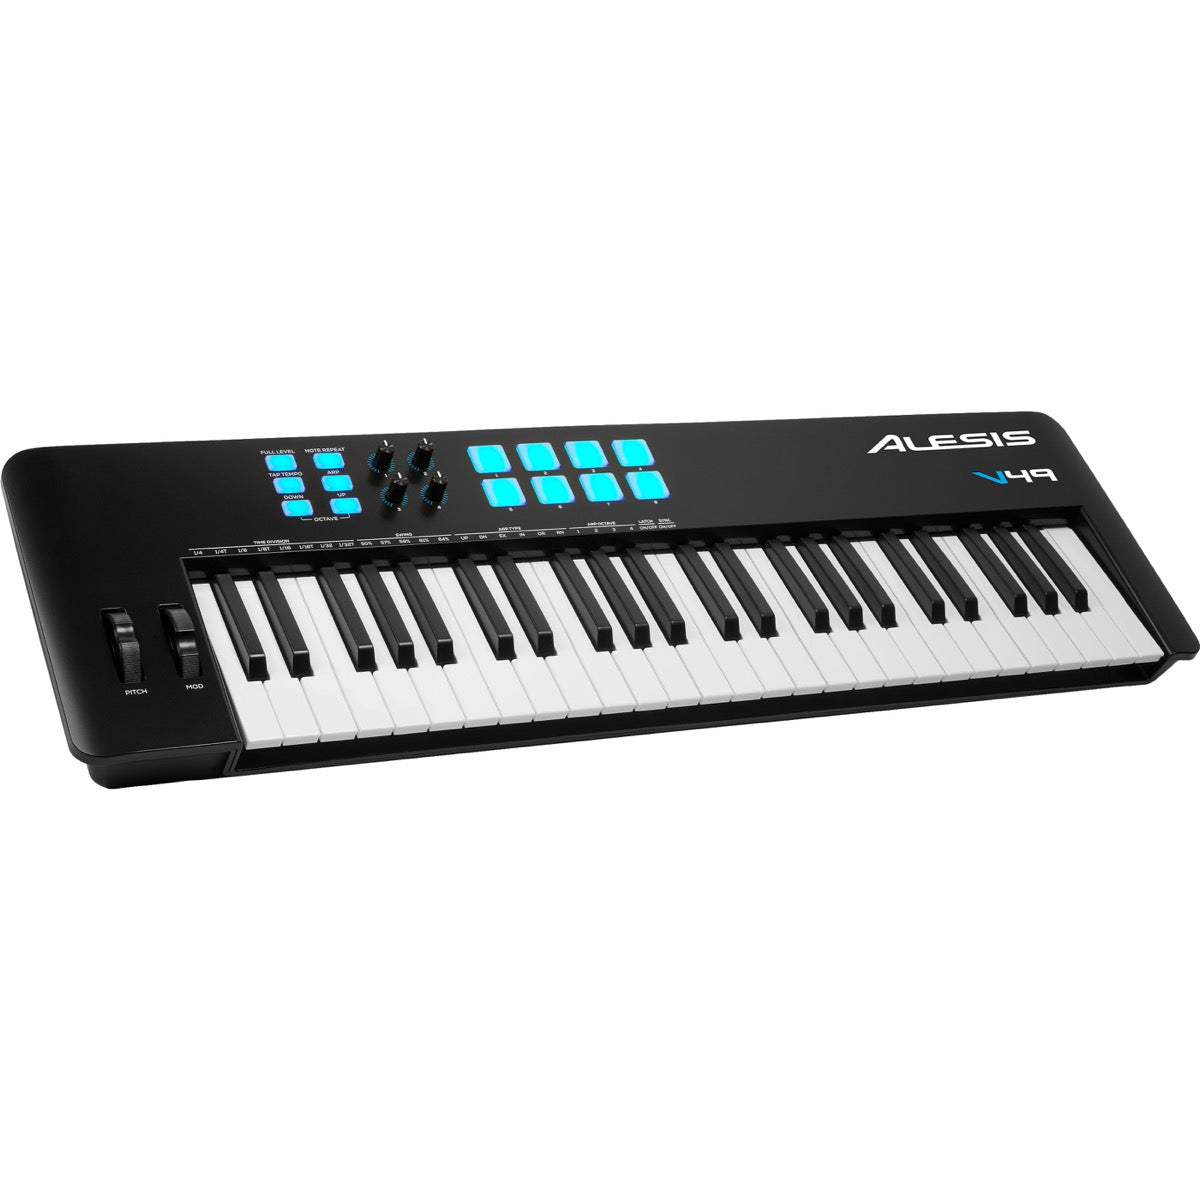 Alesis V49 MKII 49-Key USB-MIDI Keyboard Controller View 3